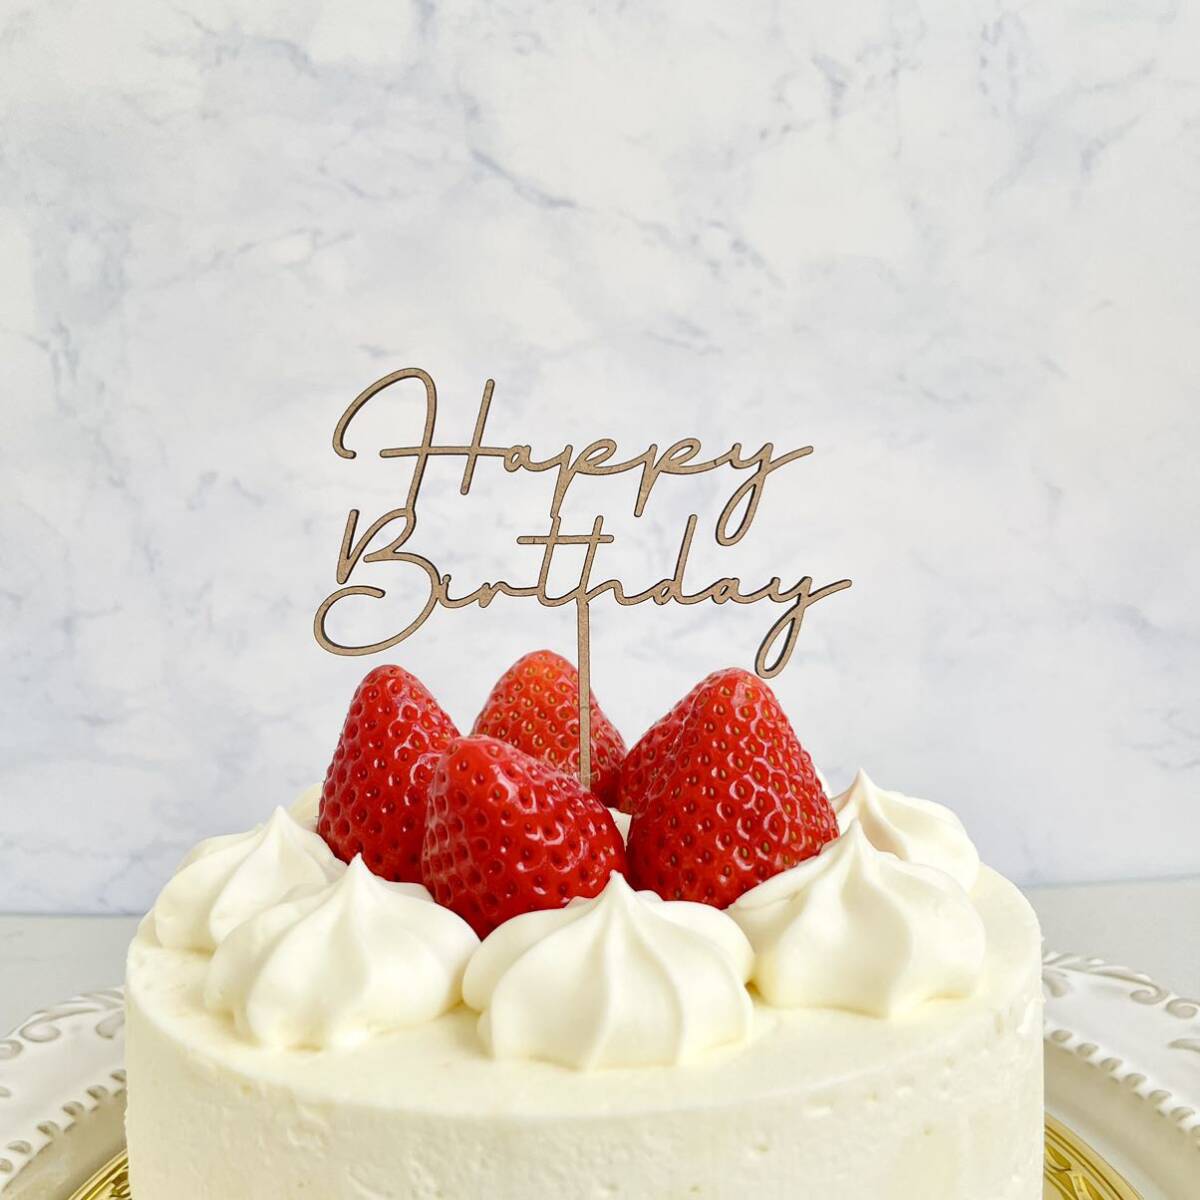  из дерева Happy Birthday кекс topa-typeD день рождения украшение happy день рождения кекс украшение день рождения кекс праздник кекс . день рождения 